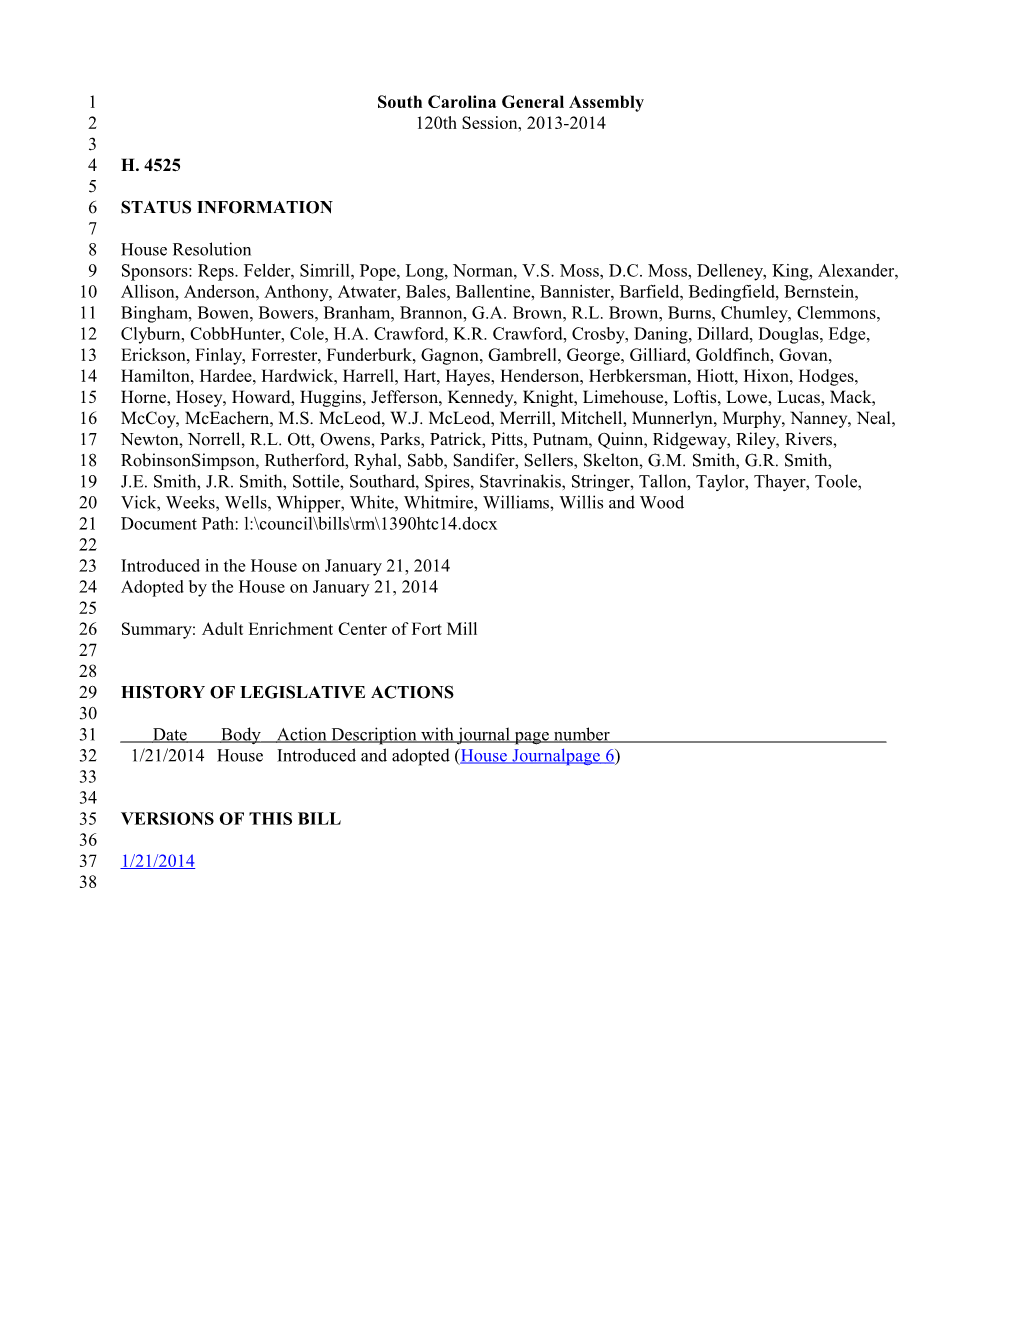 2013-2014 Bill 4525: Adult Enrichment Center of Fort Mill - South Carolina Legislature Online